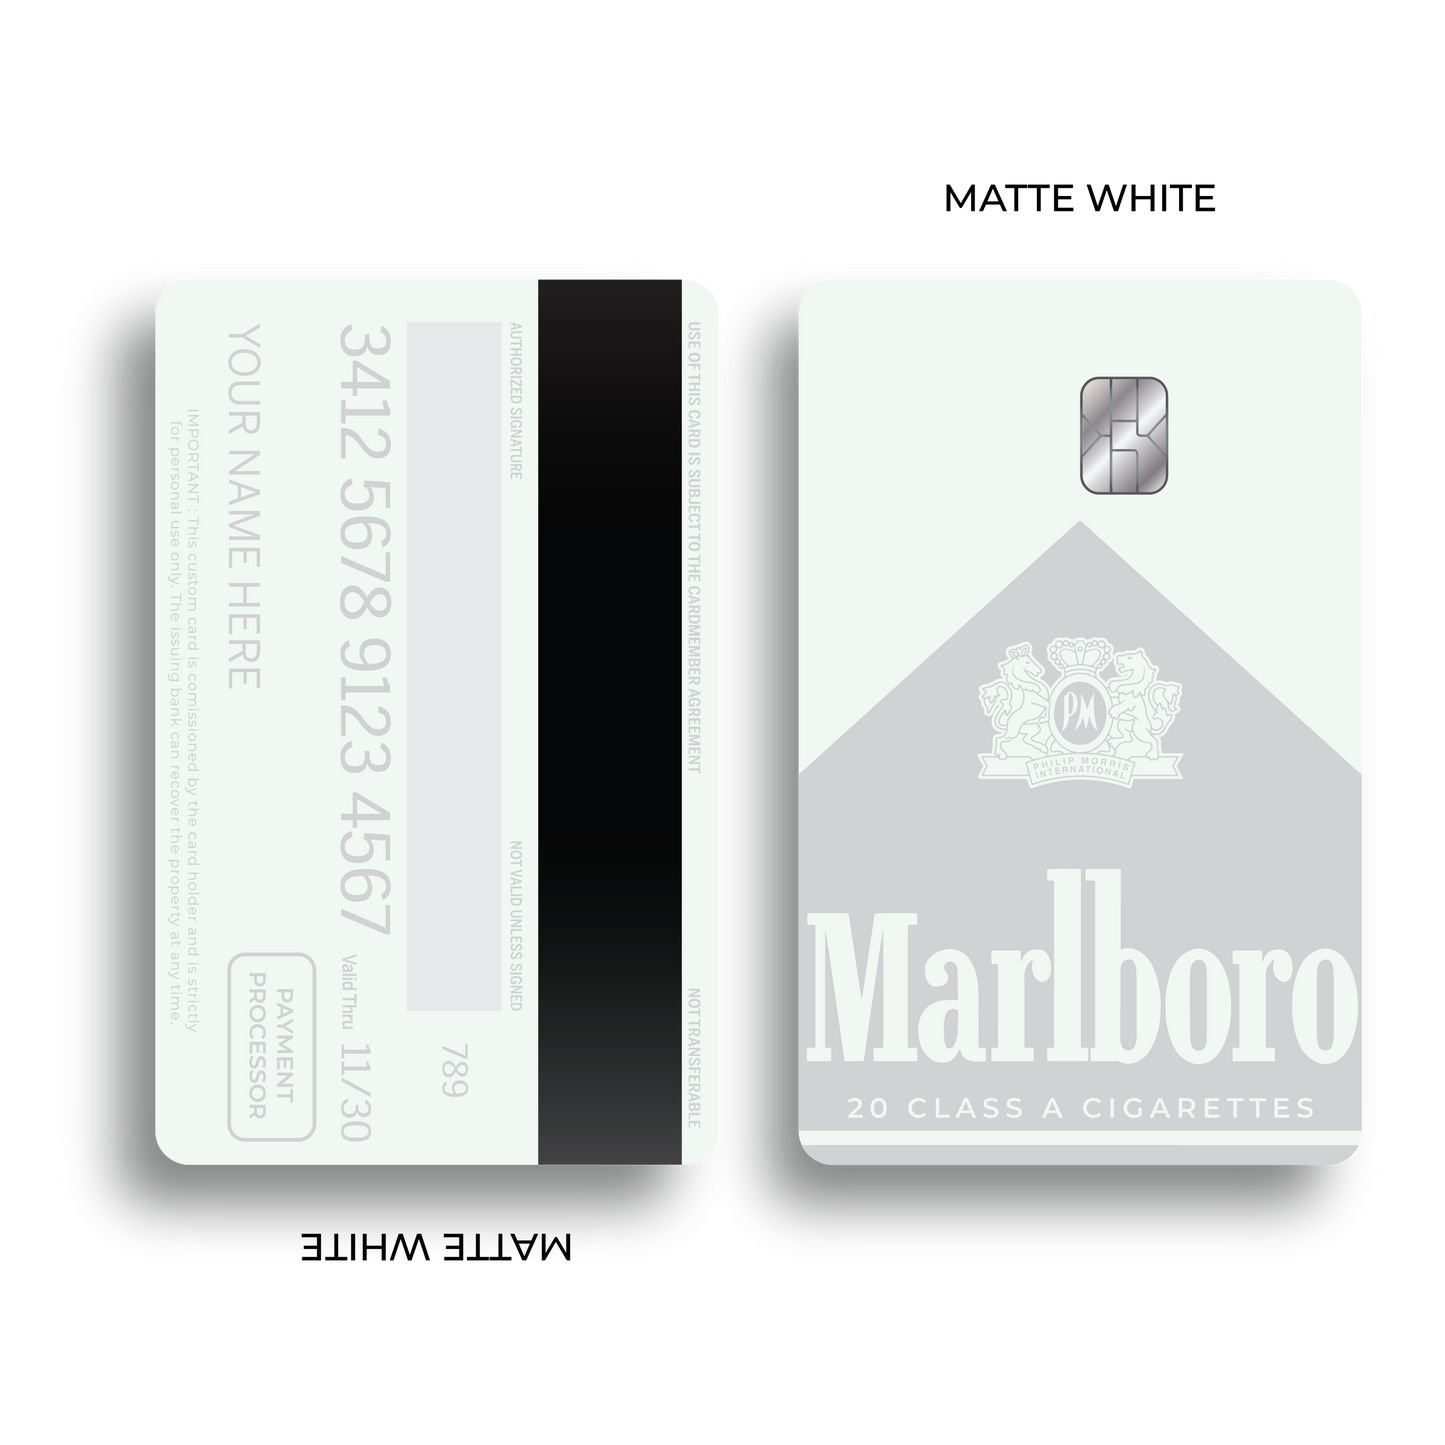 Metal Card Marlboro